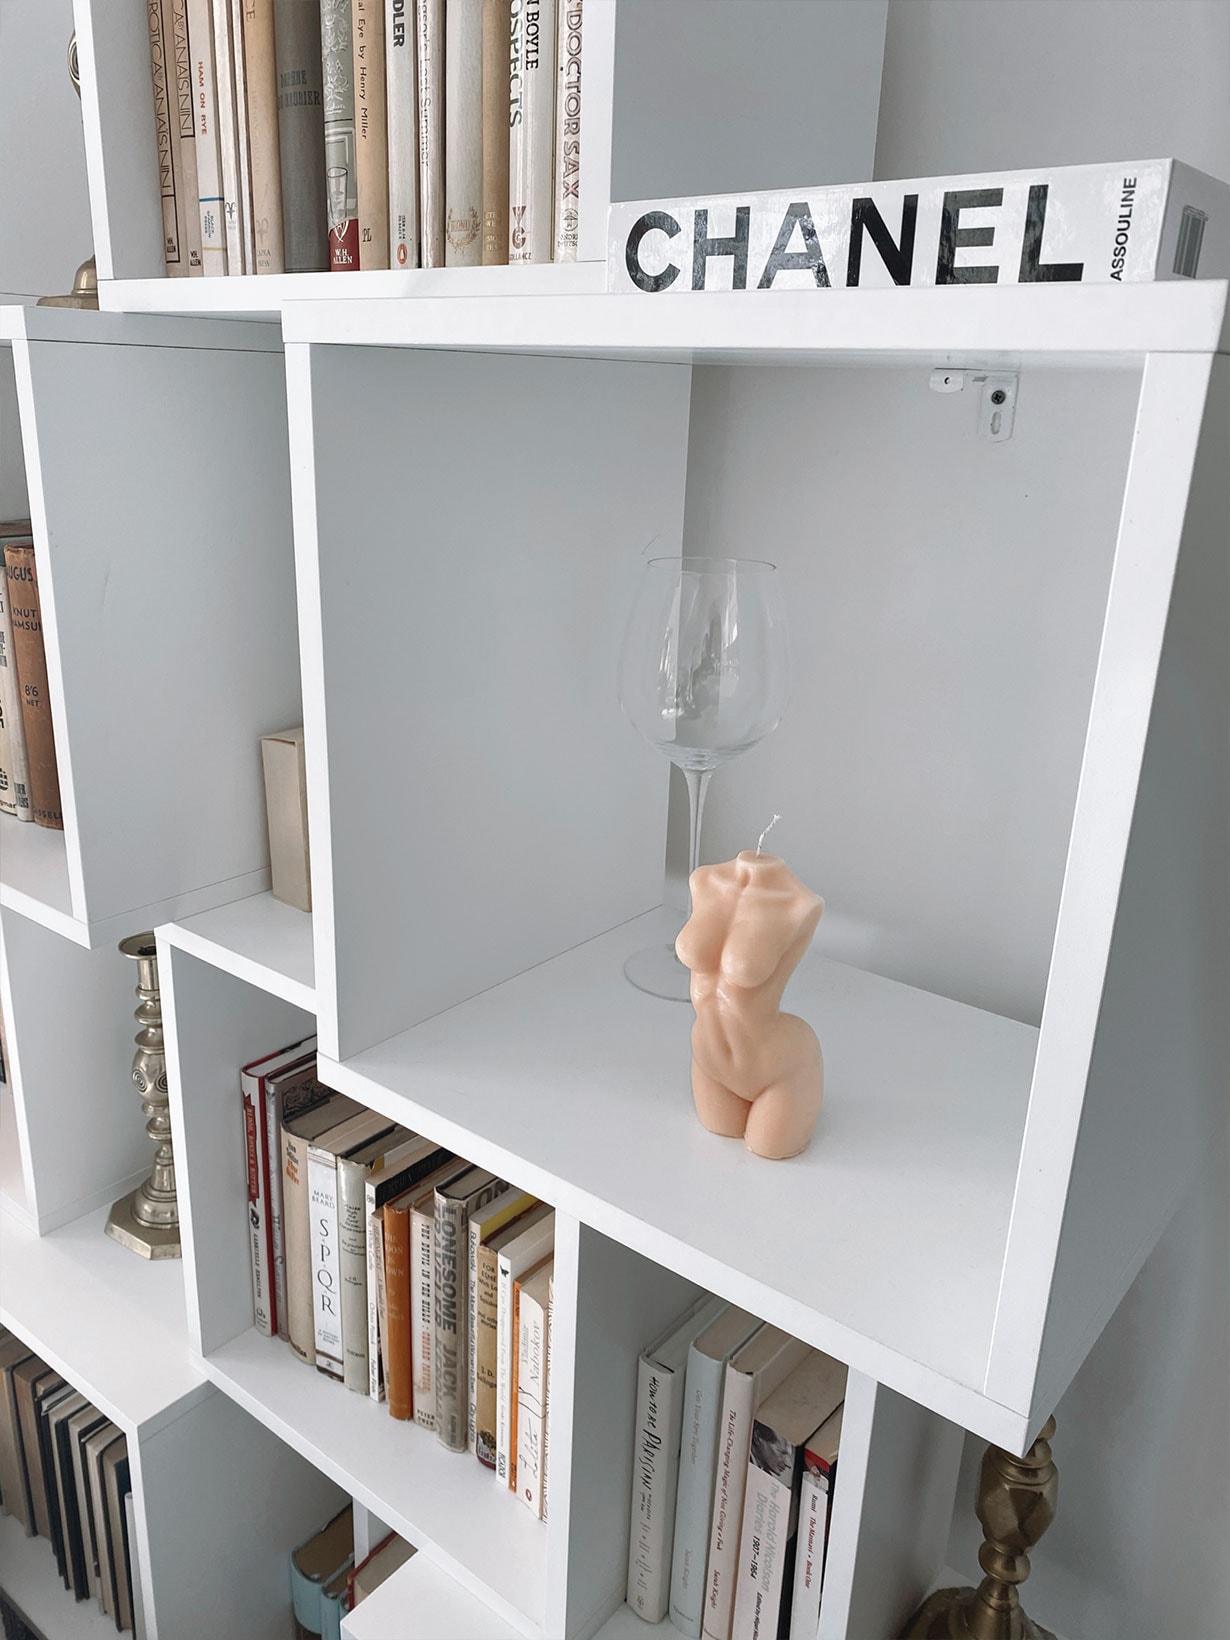 caia nude body torso candles pink home shelf books